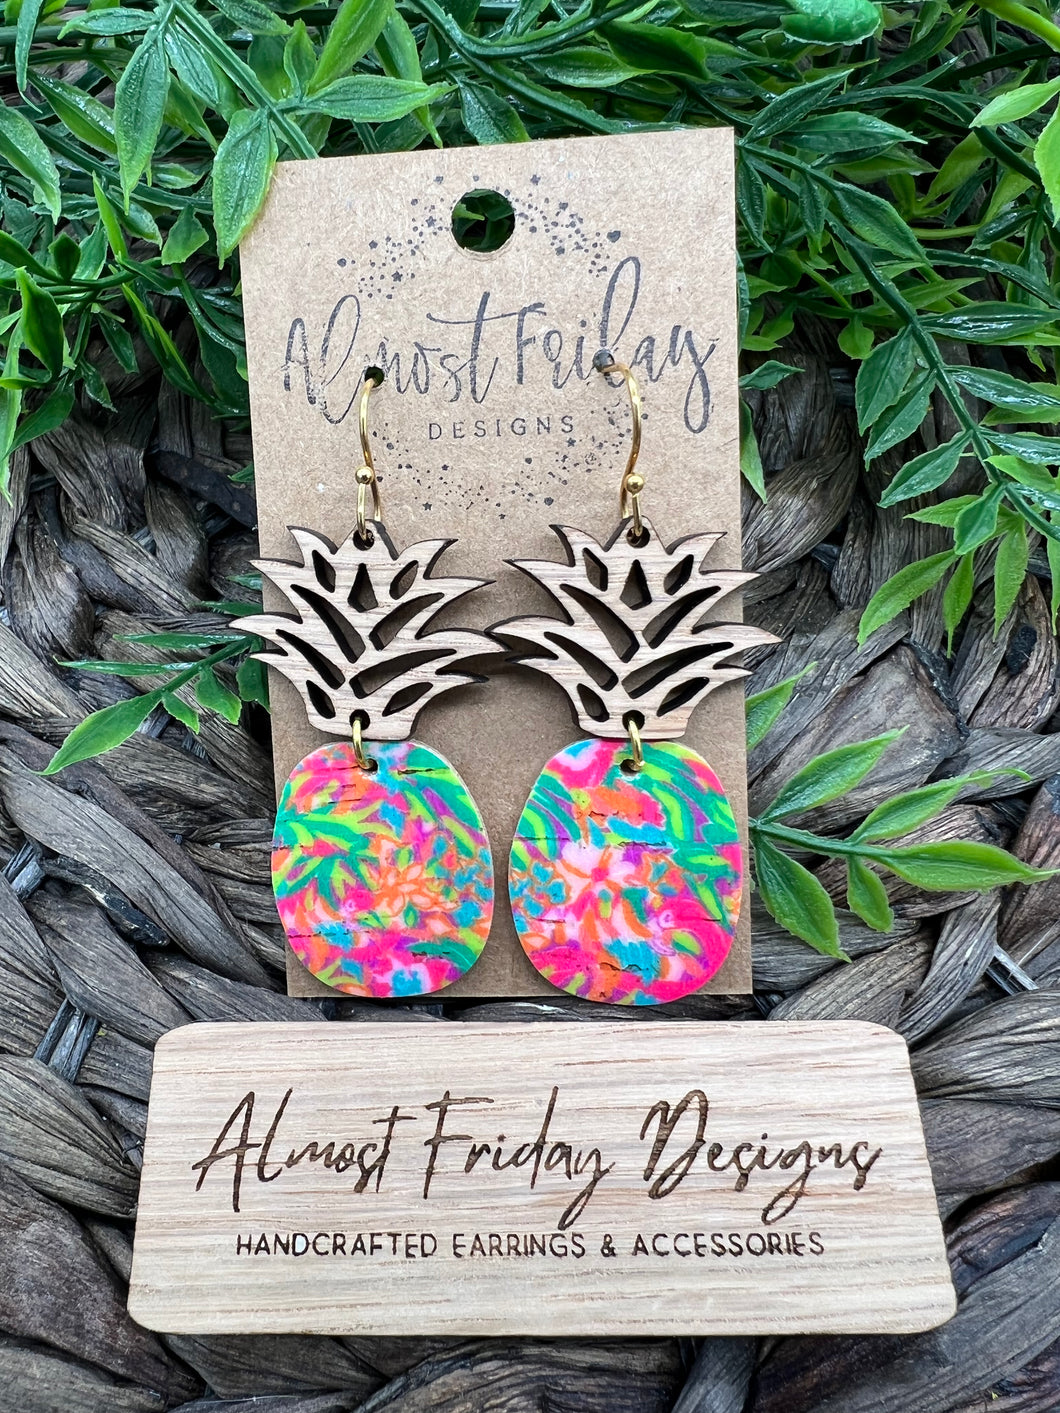 Genuine Leather Earrings - Wood Earrings - Pineapple Earrings - Pink - Green - Blue - Orange - Tropical - Flowers - Floral Design - Textured Leather - Summer Earrings - Statement Earrings